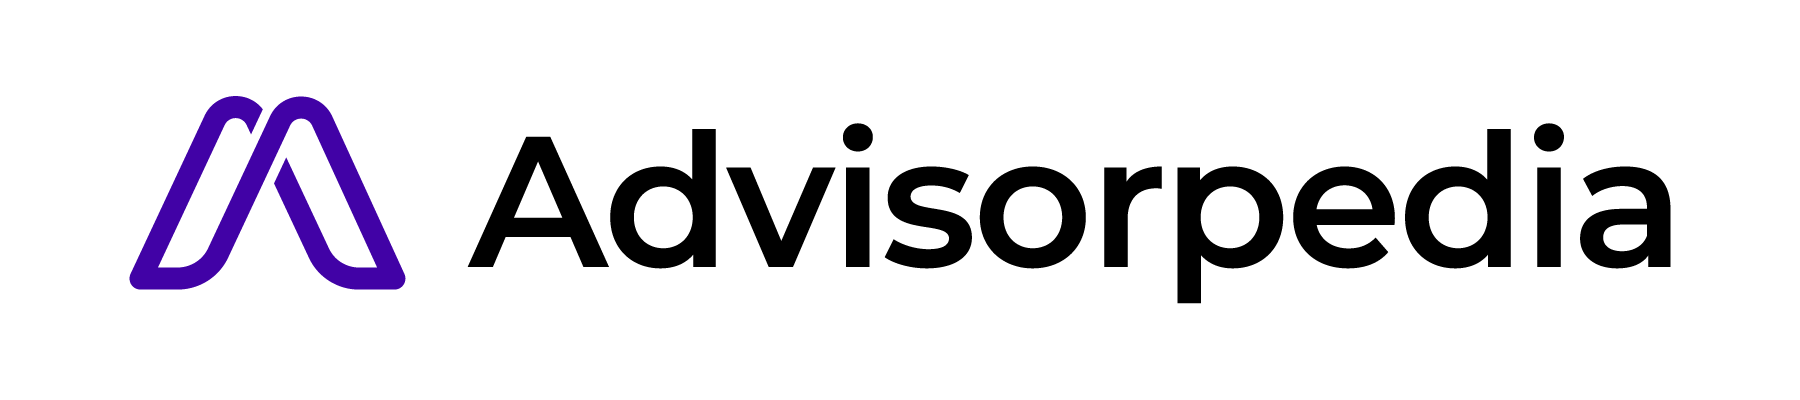 Advisorpedia Logo